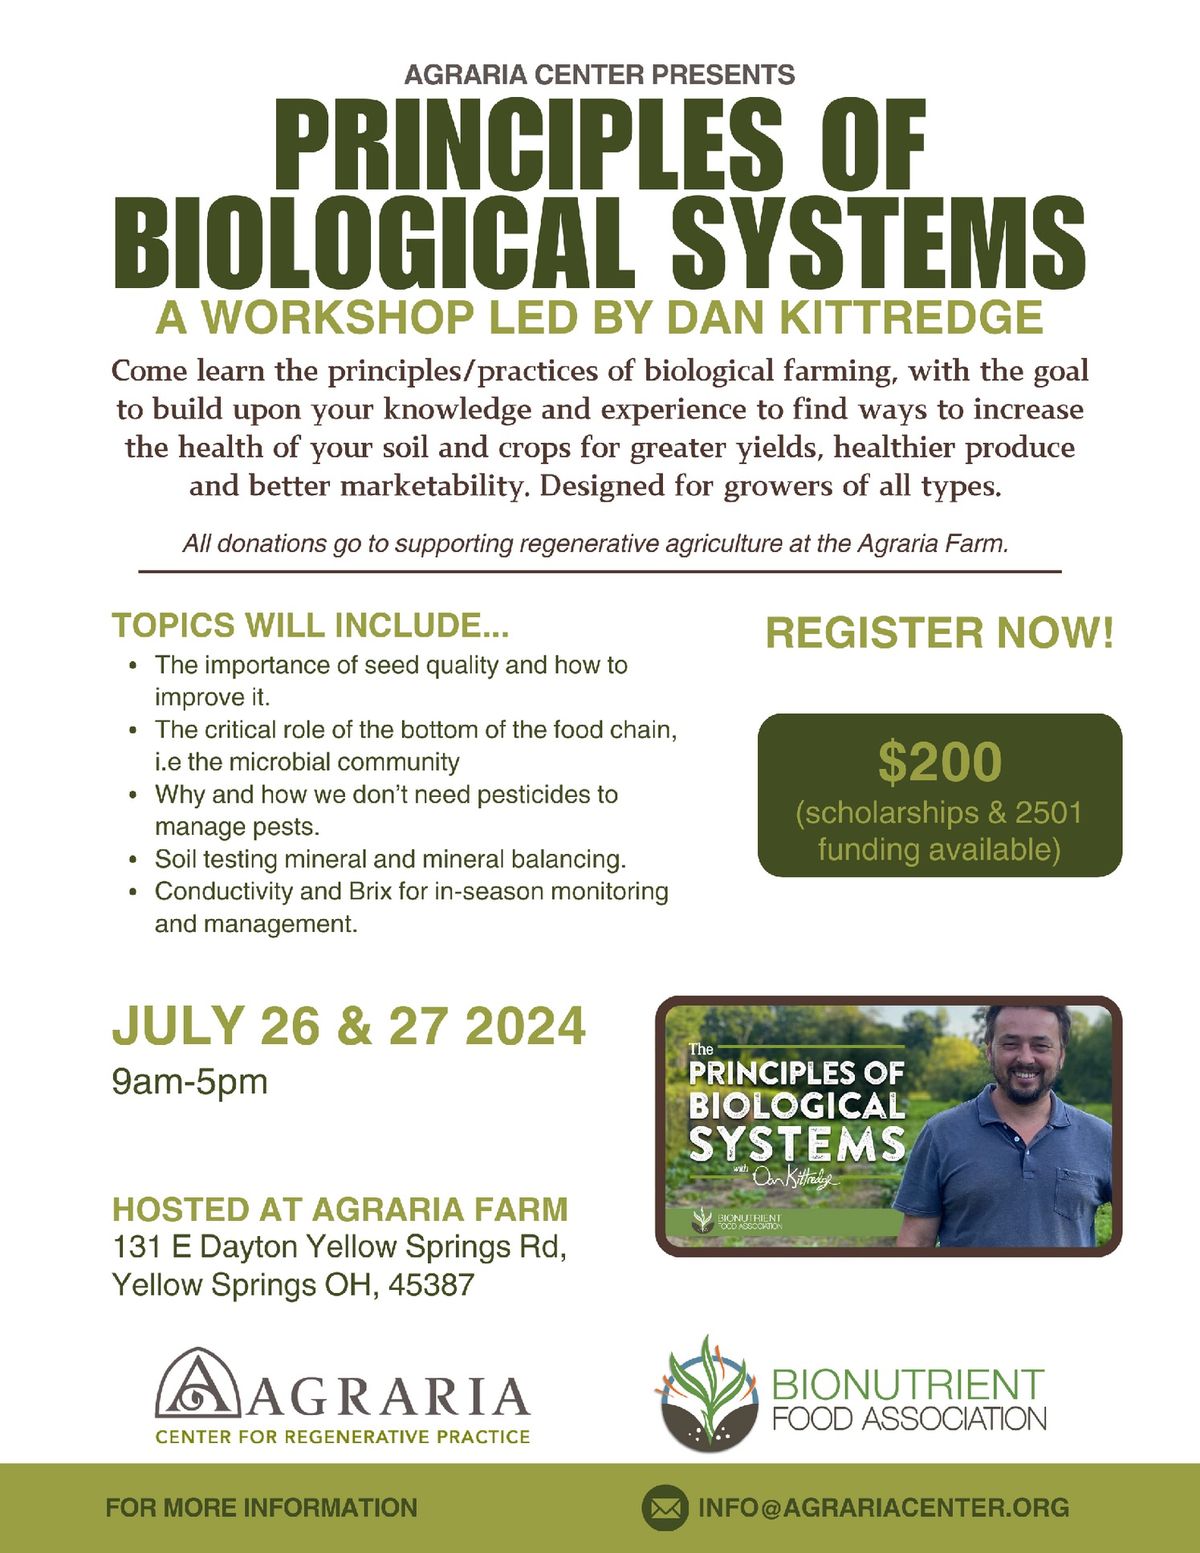 Principles of Biological Systems\u2014Dan Kittredge